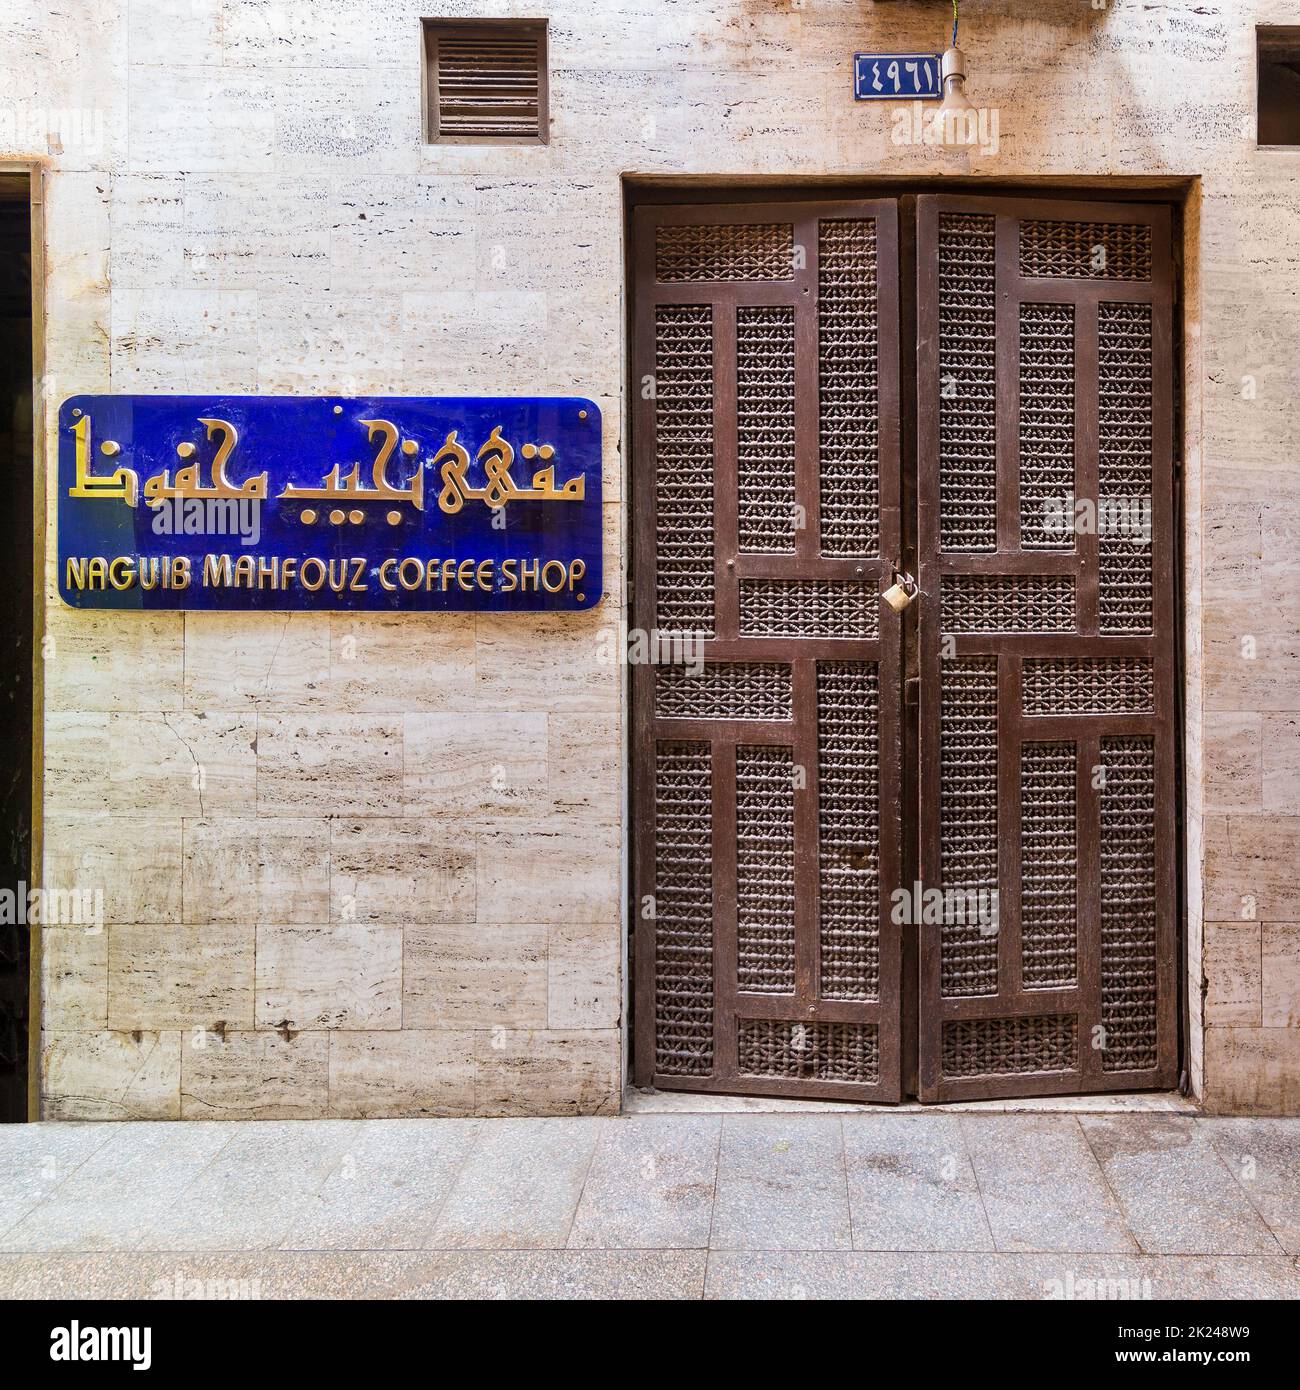 Cairo, Egitto - 26 2020 giugno: Ingresso della famosa caffetteria Naguib Mahfouz, situato nella storica era Mamluk Khan al-Khalili famoso bazar e souq, clos Foto Stock